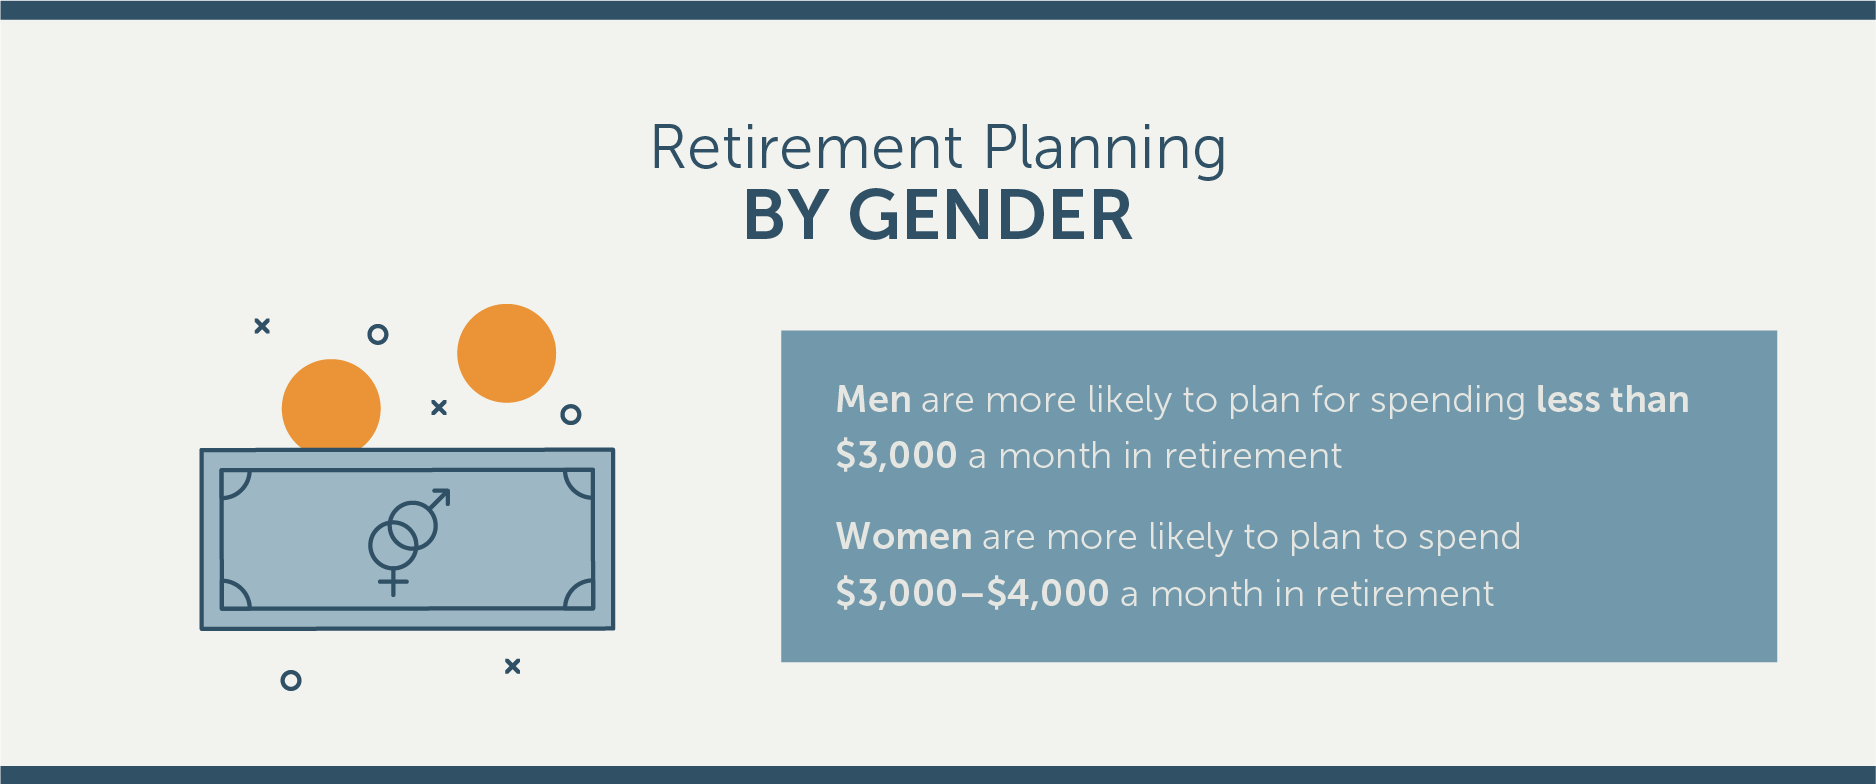 Retirement Knowledge Survey_retirement planning by gender